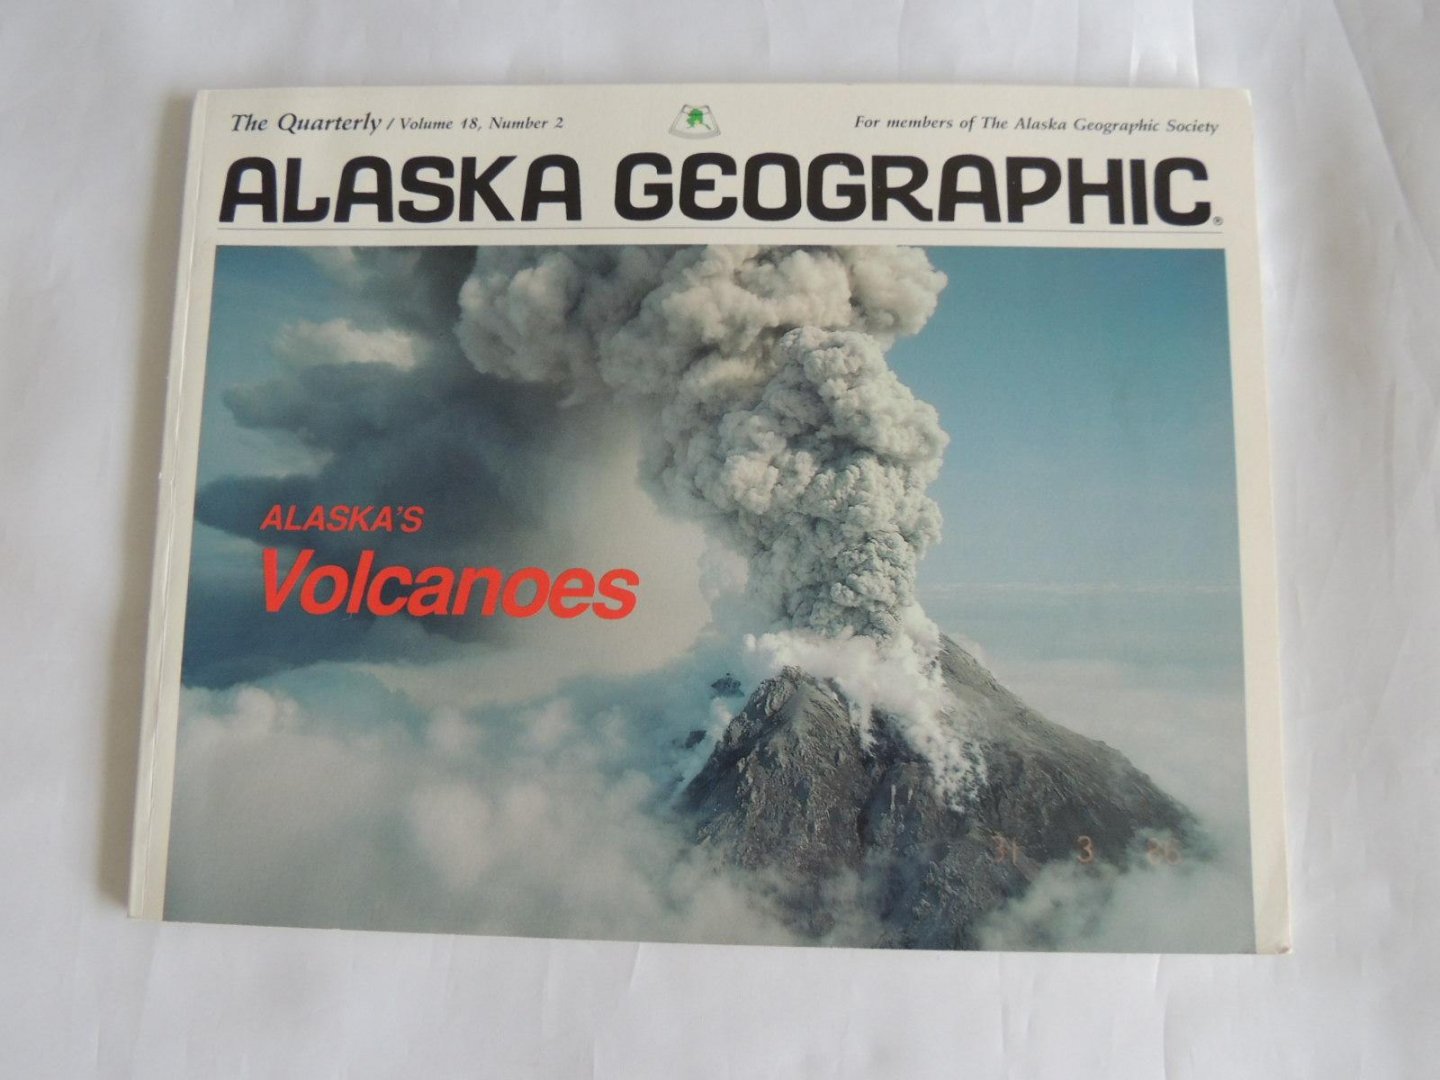 rennick penny - Alaska Geographic - Alaska's Volcanoes